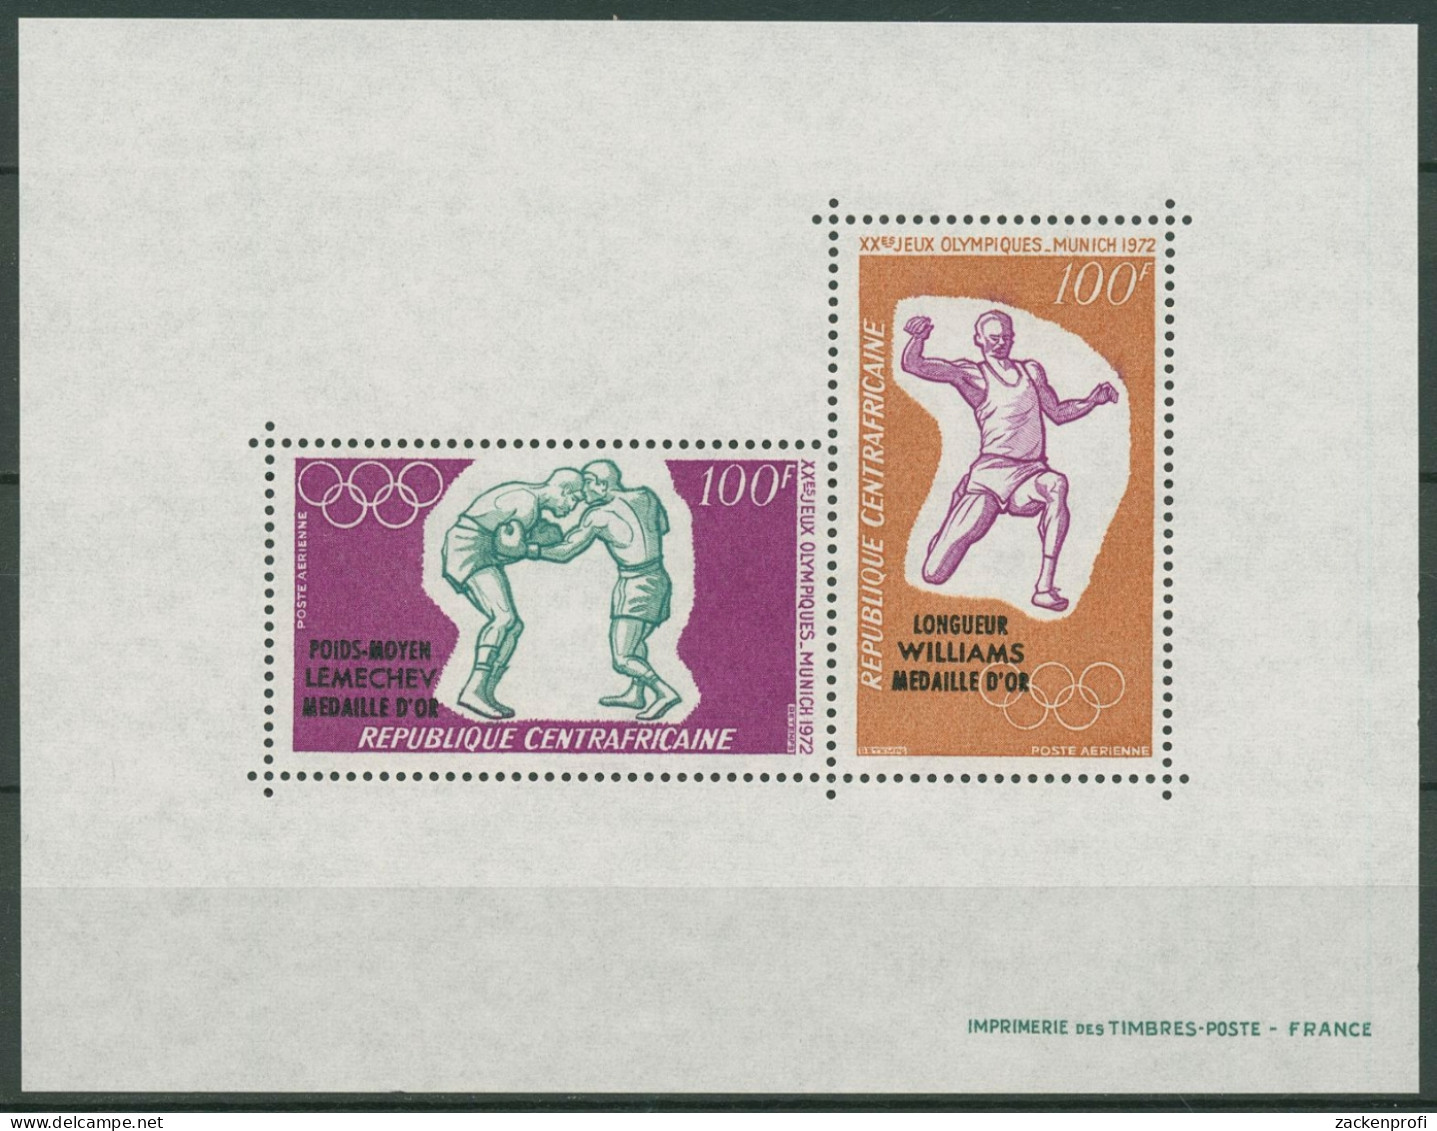 Zentralafrikanische Republik 1972 Gold Olymp. München Block 8 Postfrisch (C29674) - Centrafricaine (République)